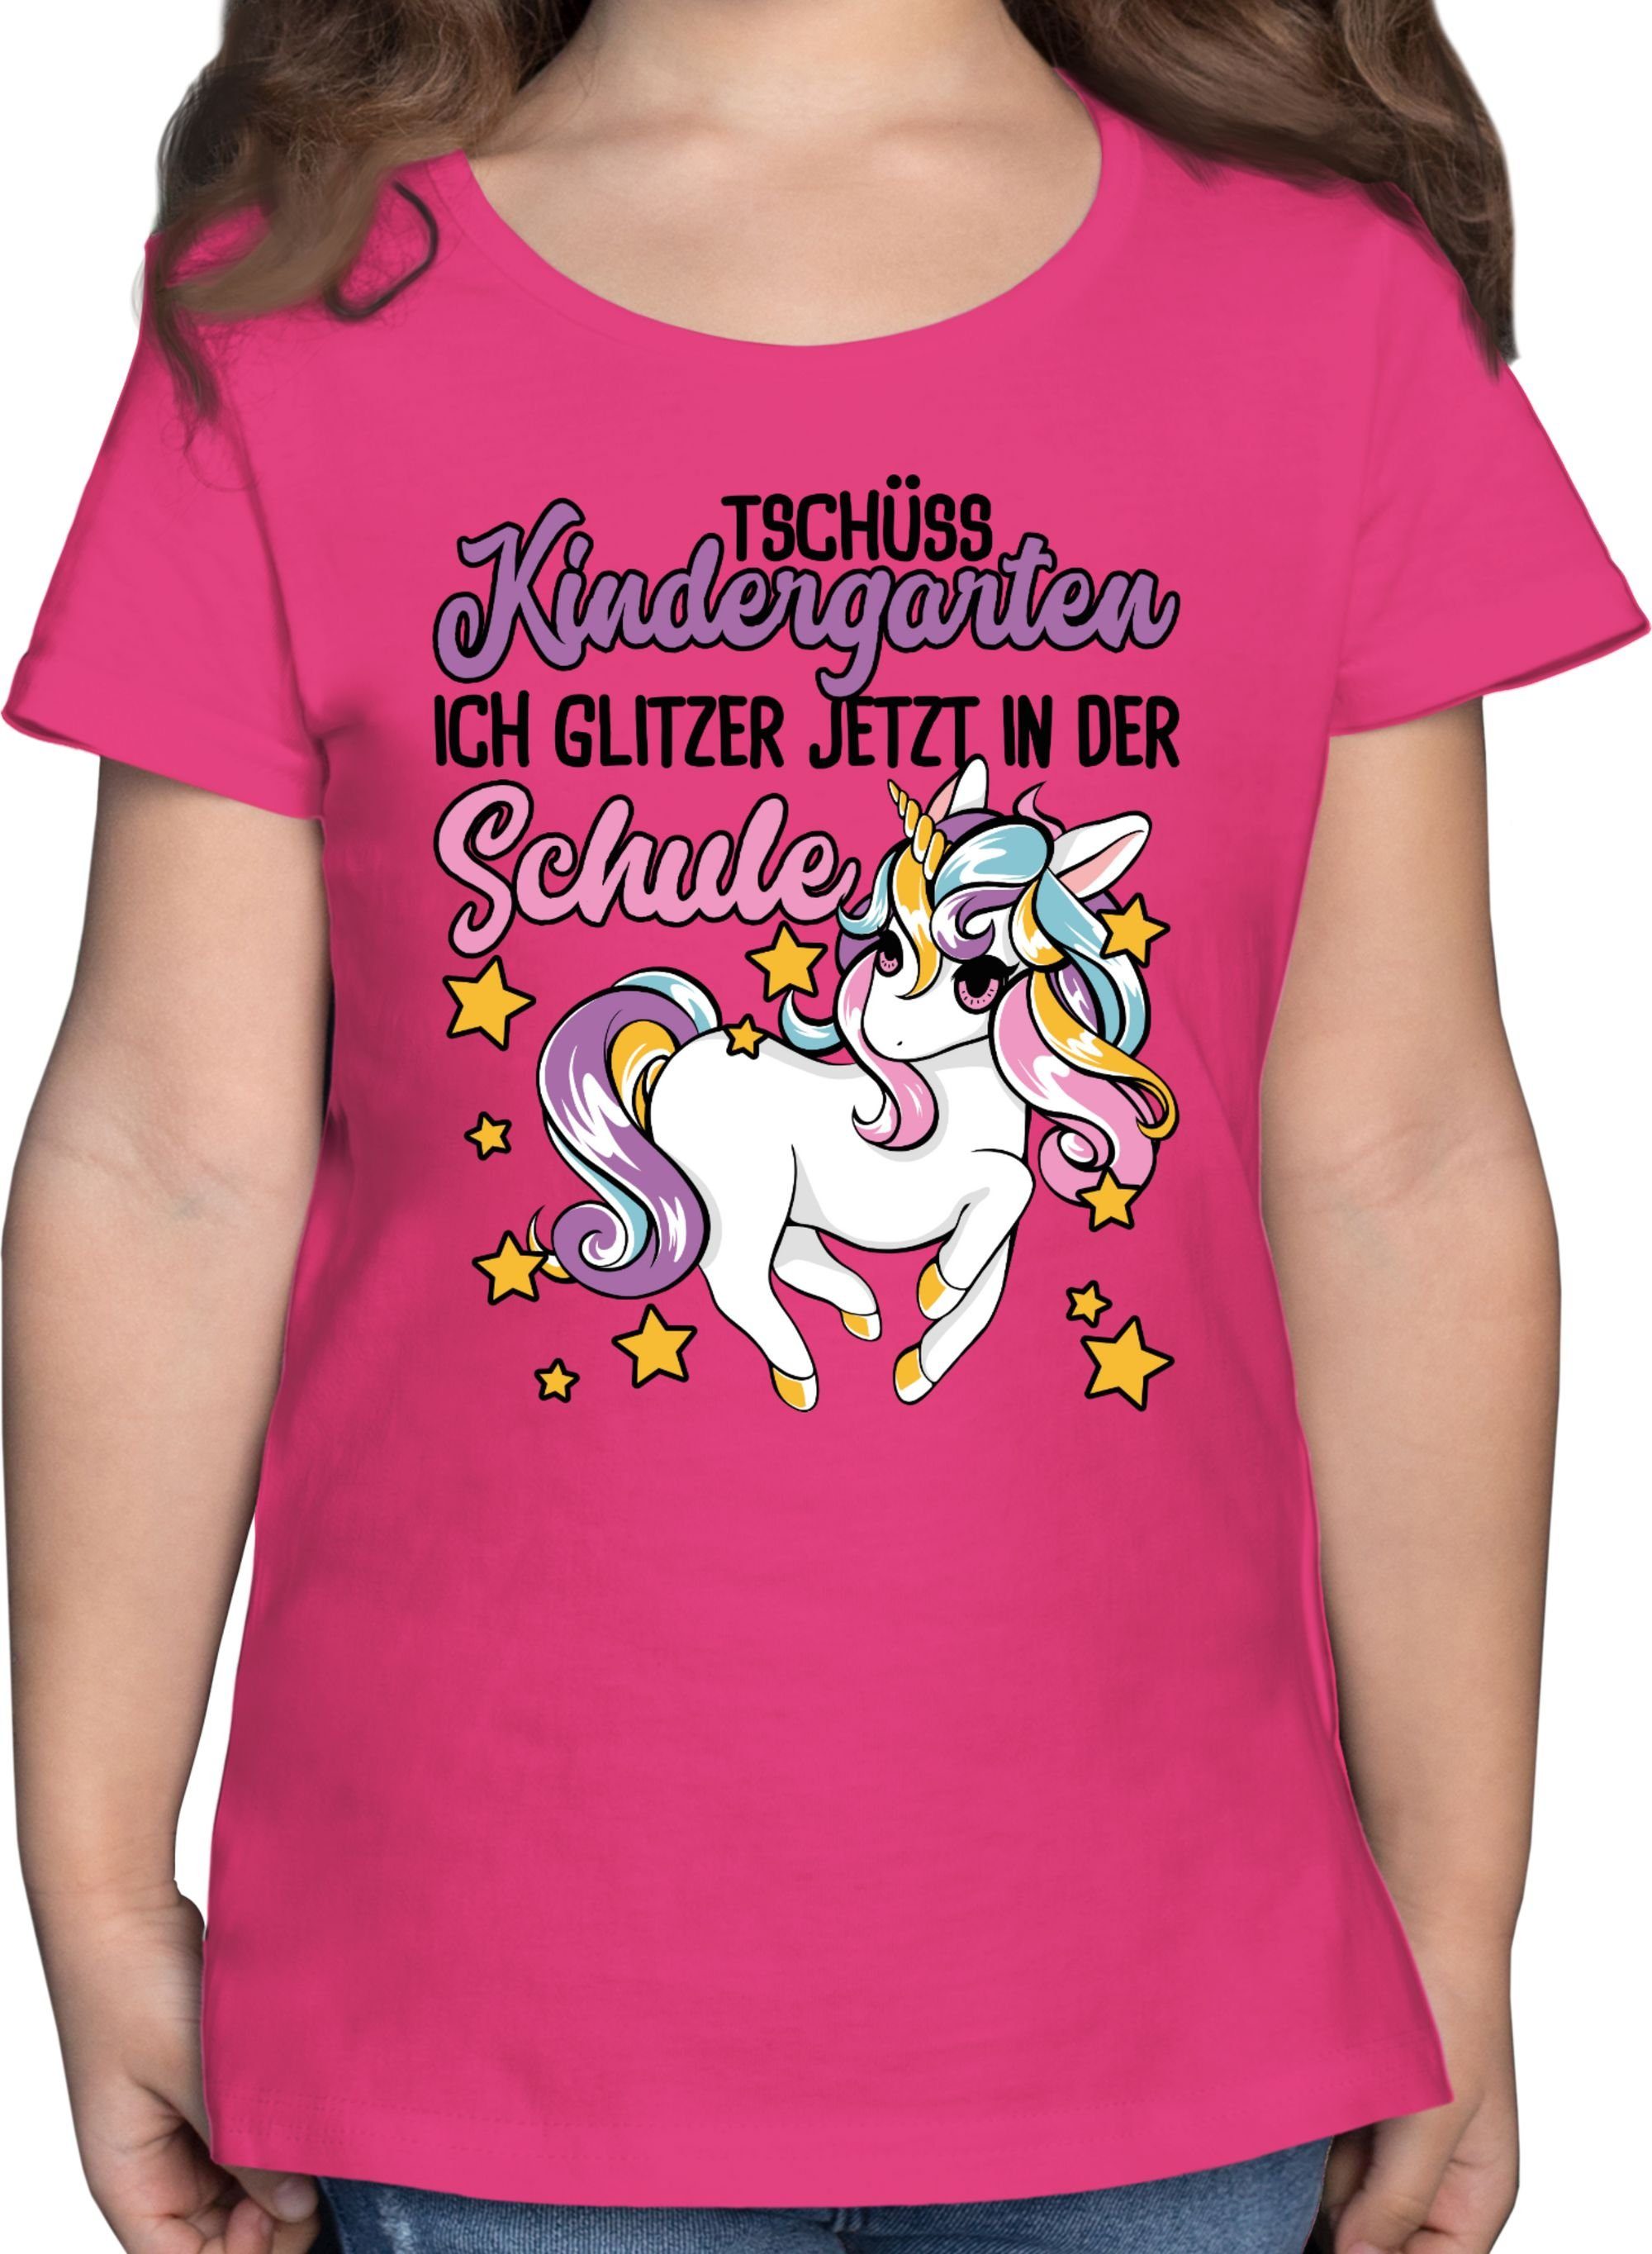 Shirtracer T-Shirt Tschüss Kindergarten Einhorn - Glitzer jetzt in der Schule Einschulung Mädchen 1 Fuchsia